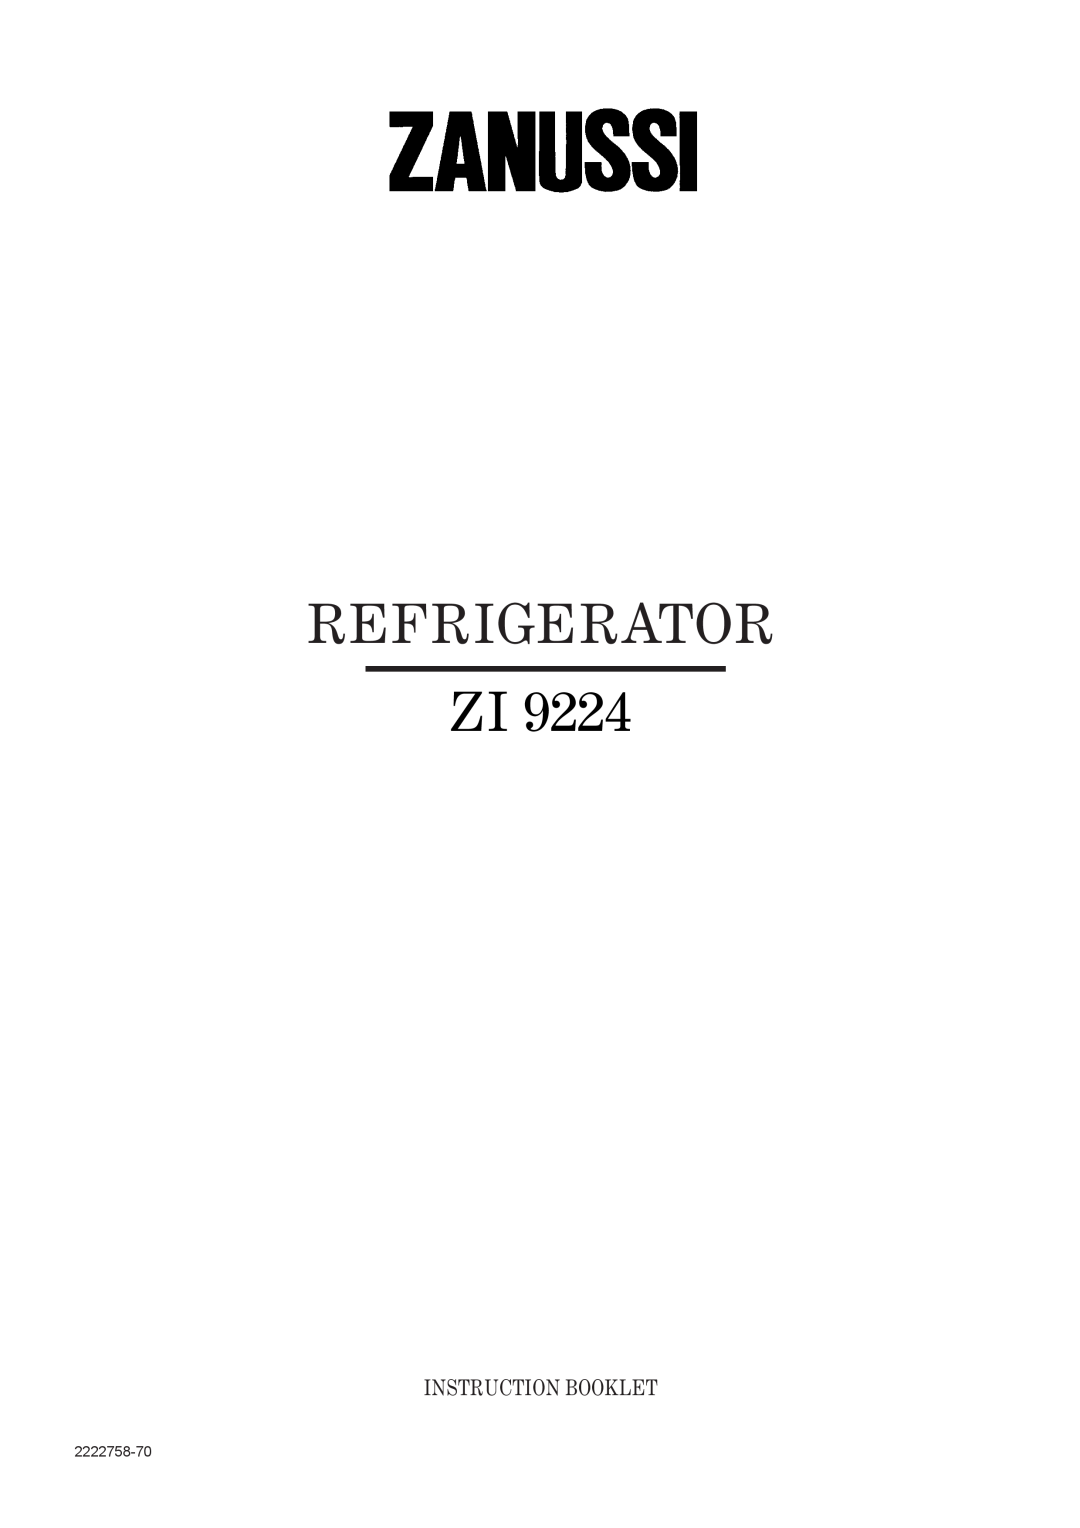 Zanussi ZI 9224 manual Refrigerator, Instruction Booklet, 2222758-70 